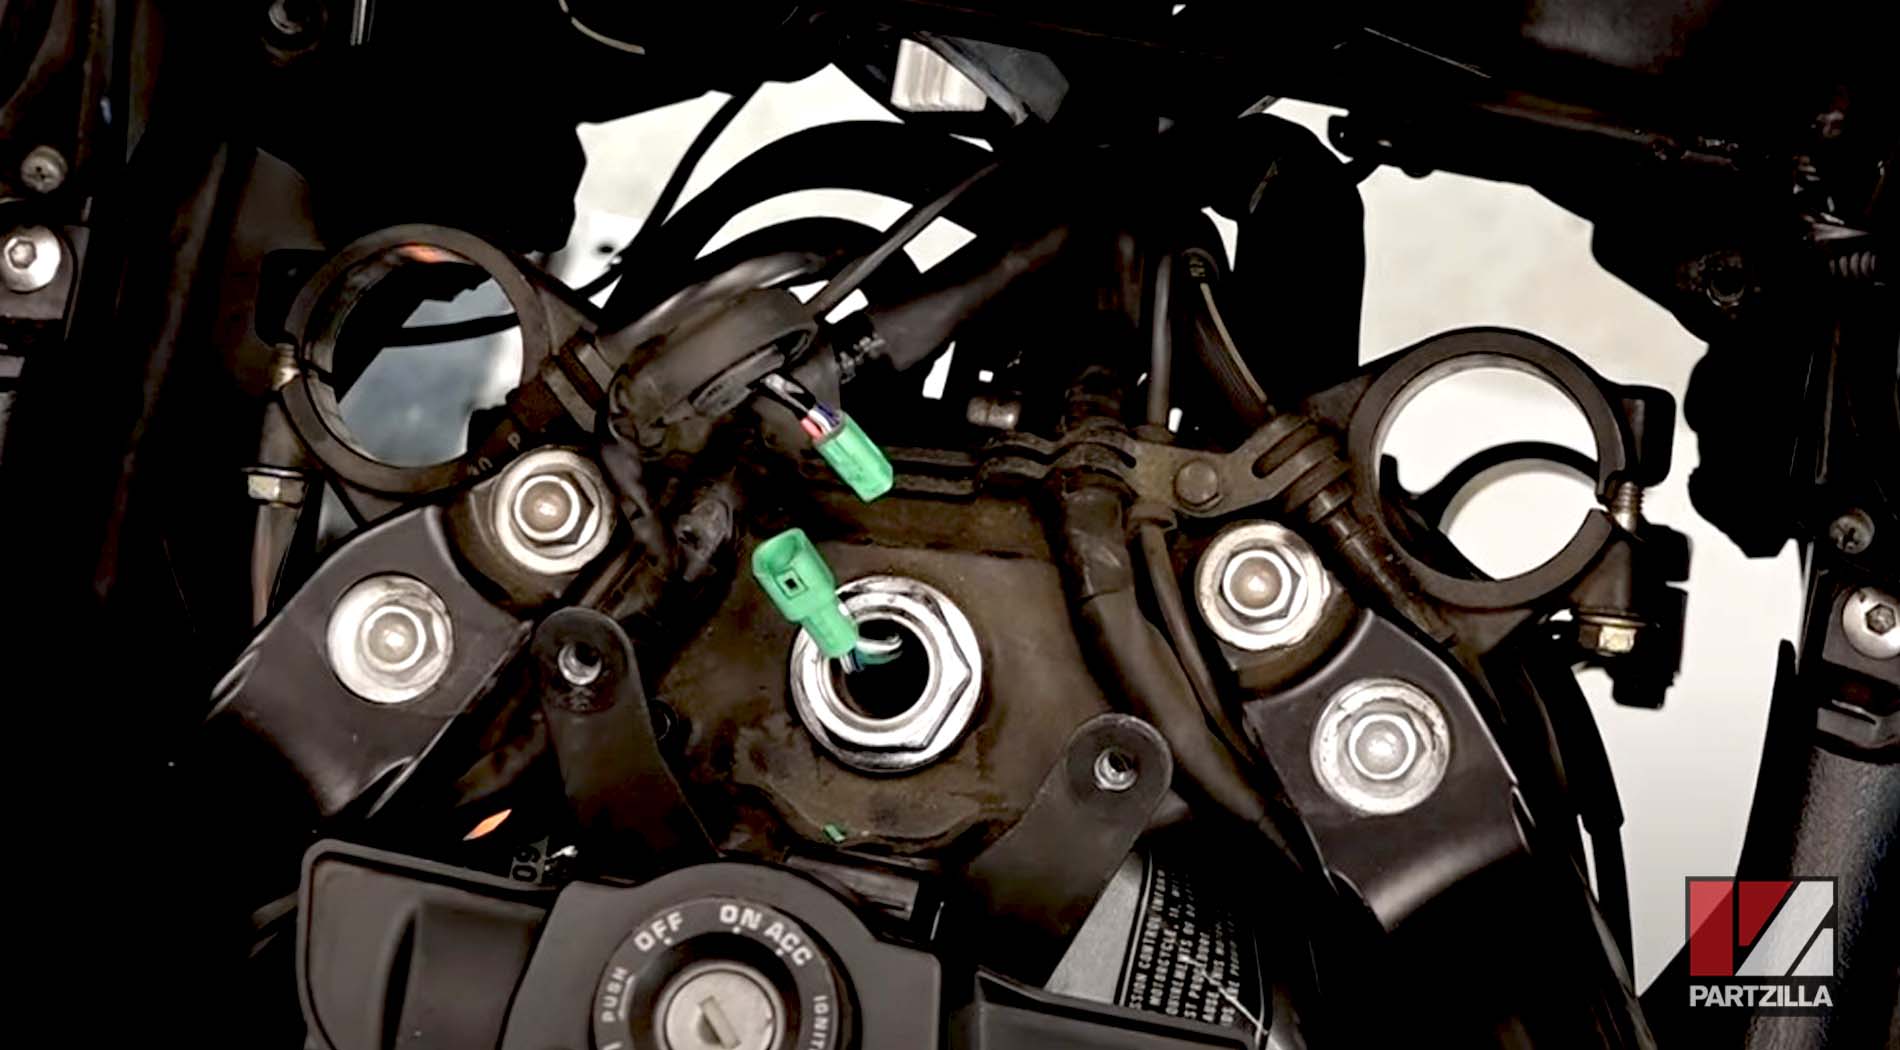 Honda motorcycle steering stem bearing replacement disassembly